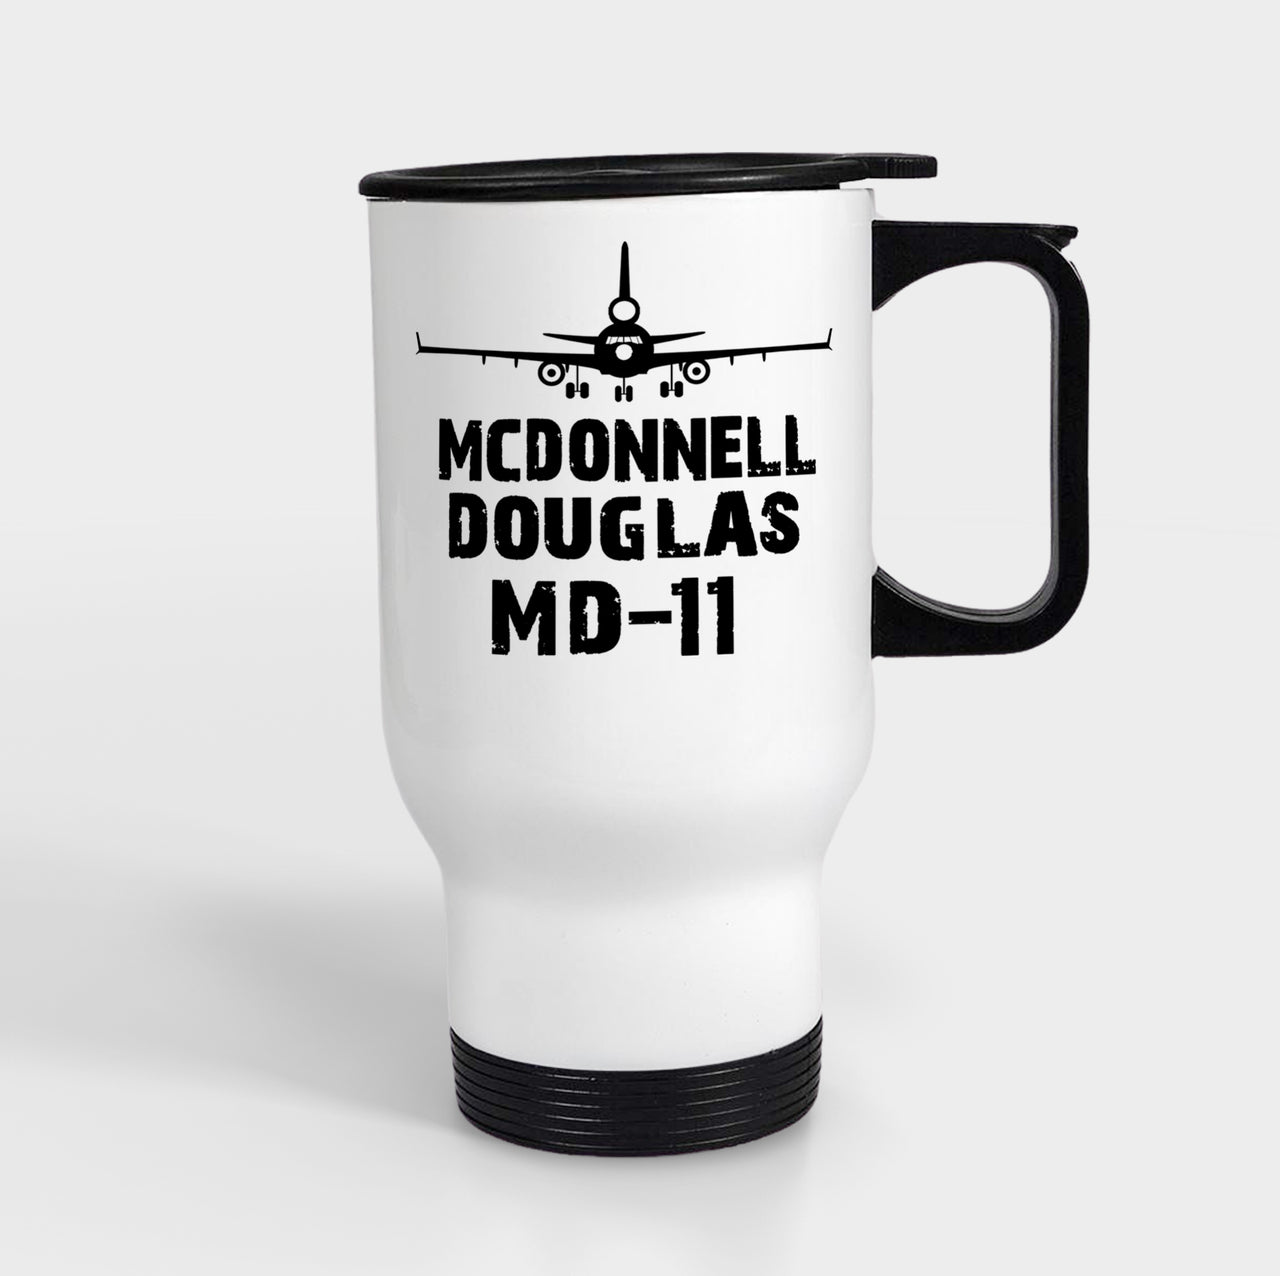 McDonnell Douglas MD-11 & Plane Designed Travel Mugs (With Holder)